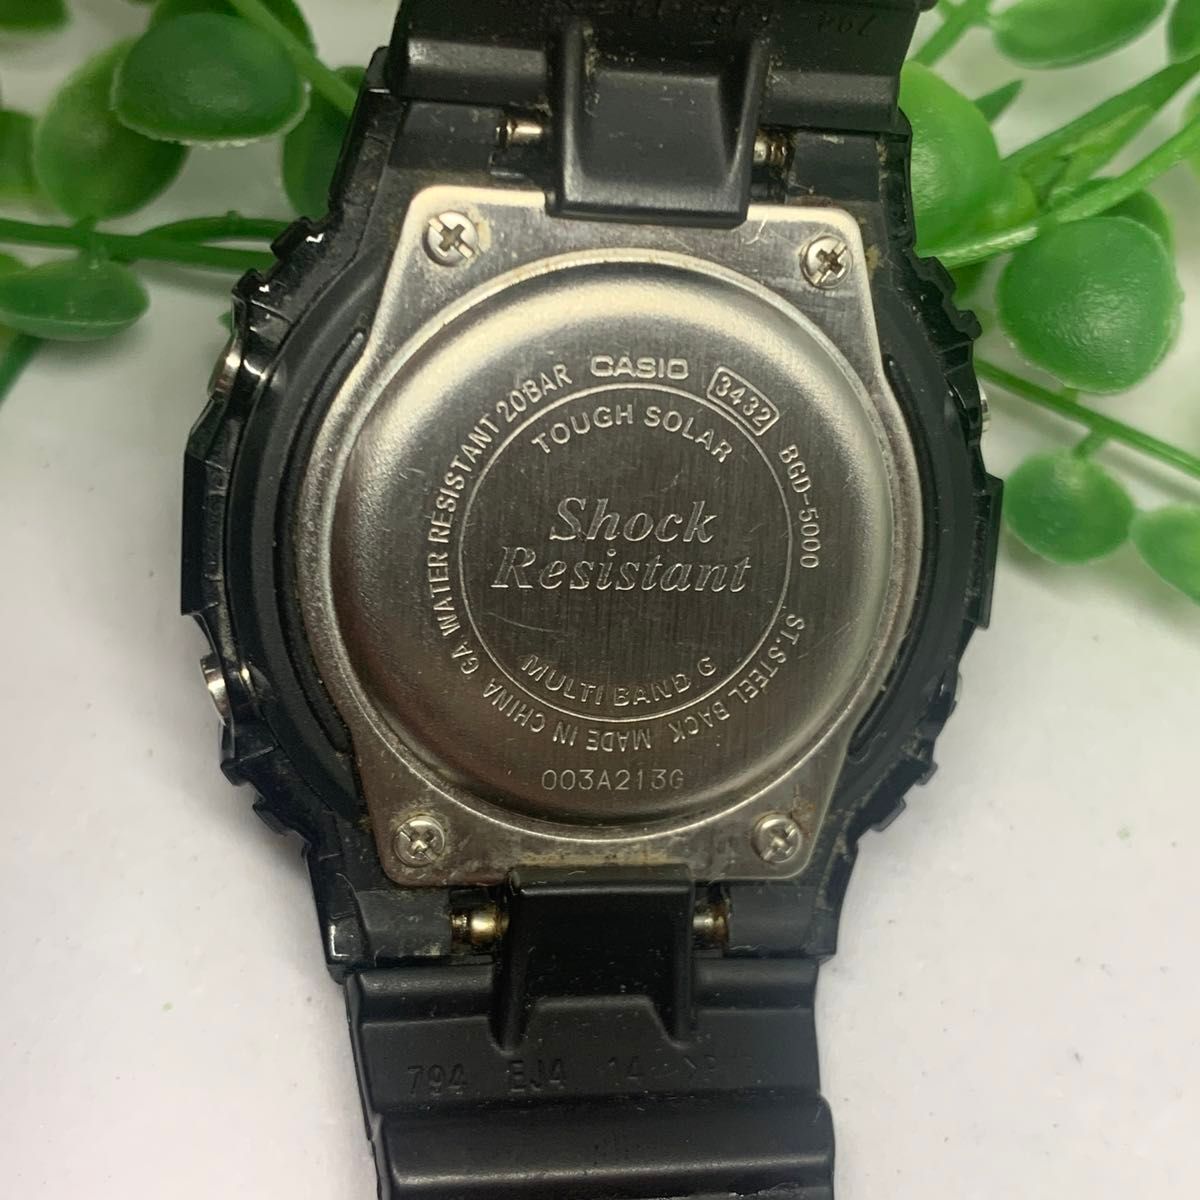 CASIO カシオ　BGD-5000　腕時計　タフソーラー　マルチバンド6